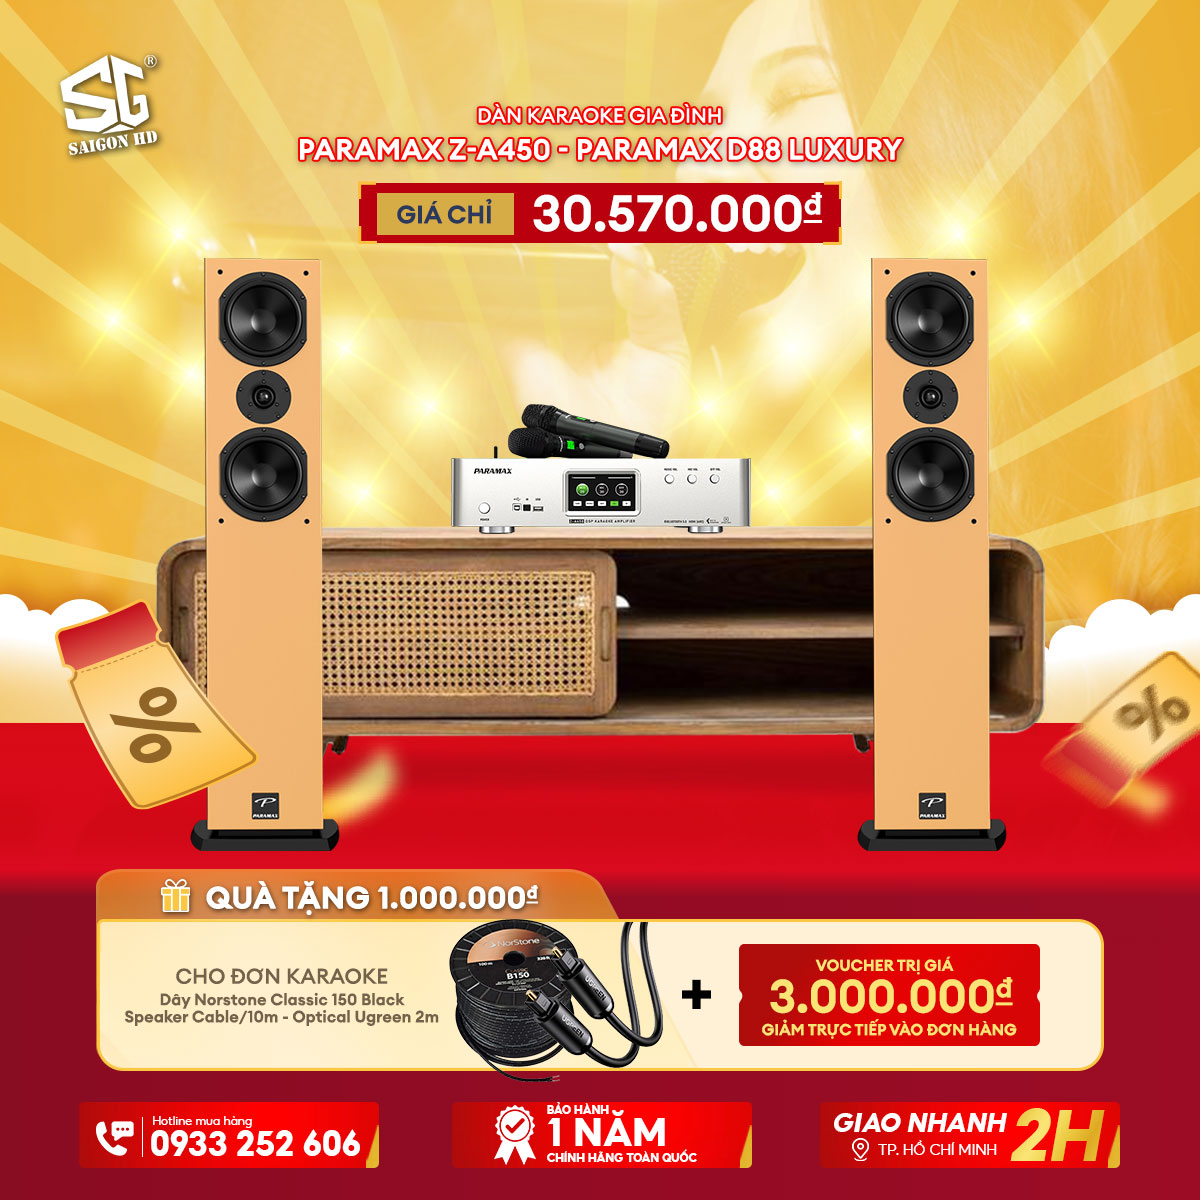 Dàn karaoke Paramax Z-A450 + Paramax D88 Luxury